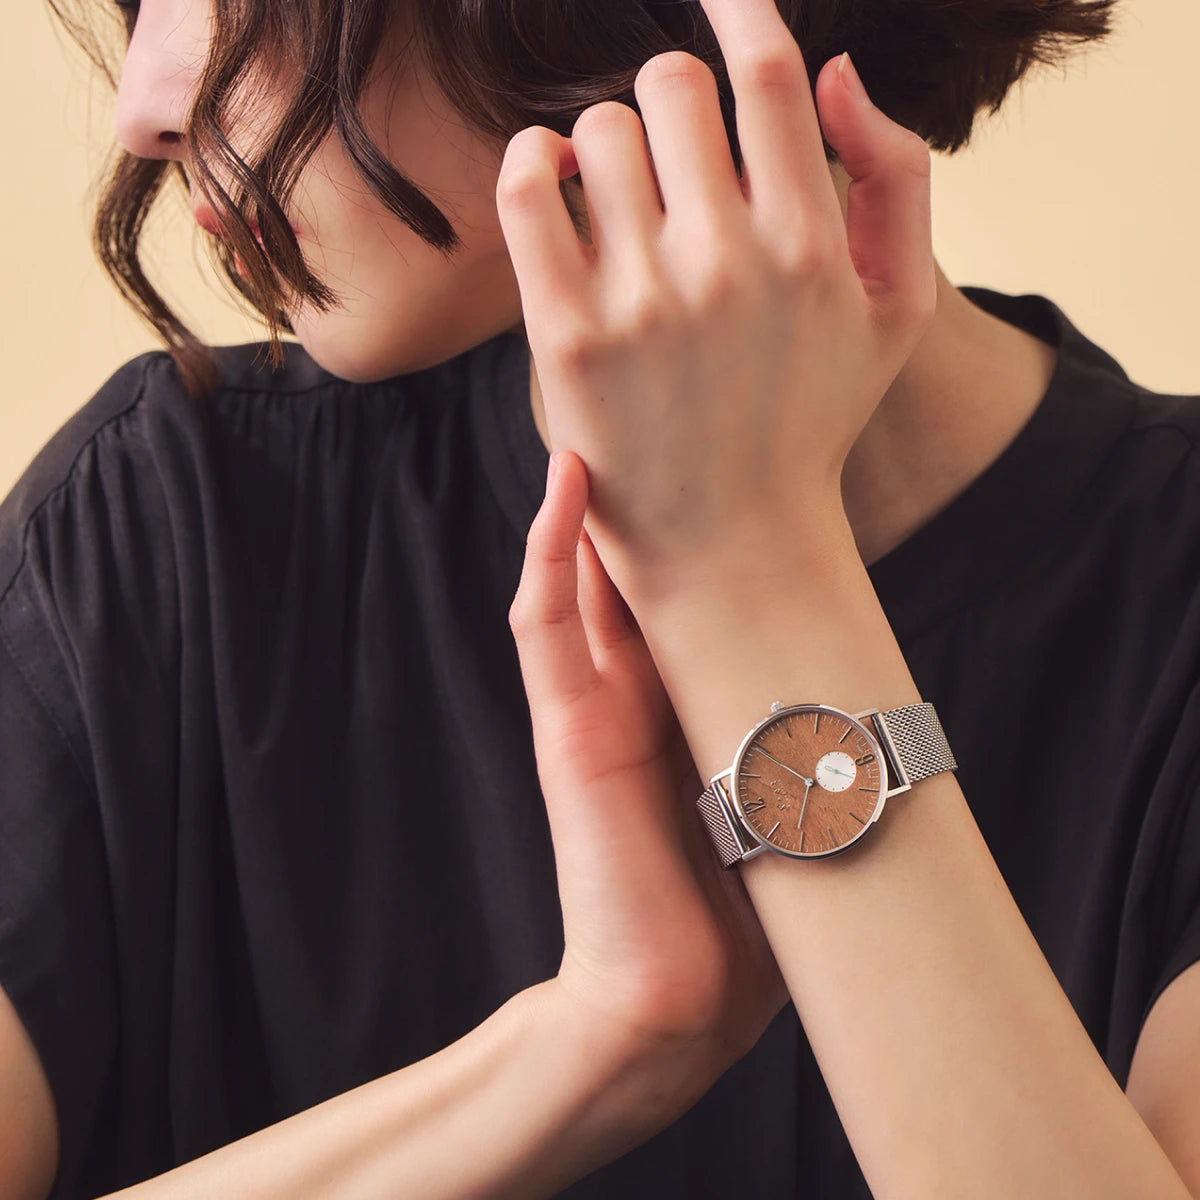 Knot CS-36SVWD-SAKURA 腕時計 メンズ レディース クォーツ ホワイト 日本製 36mm スモールセコンド 木目 木製 –  Maker's Watch Knot